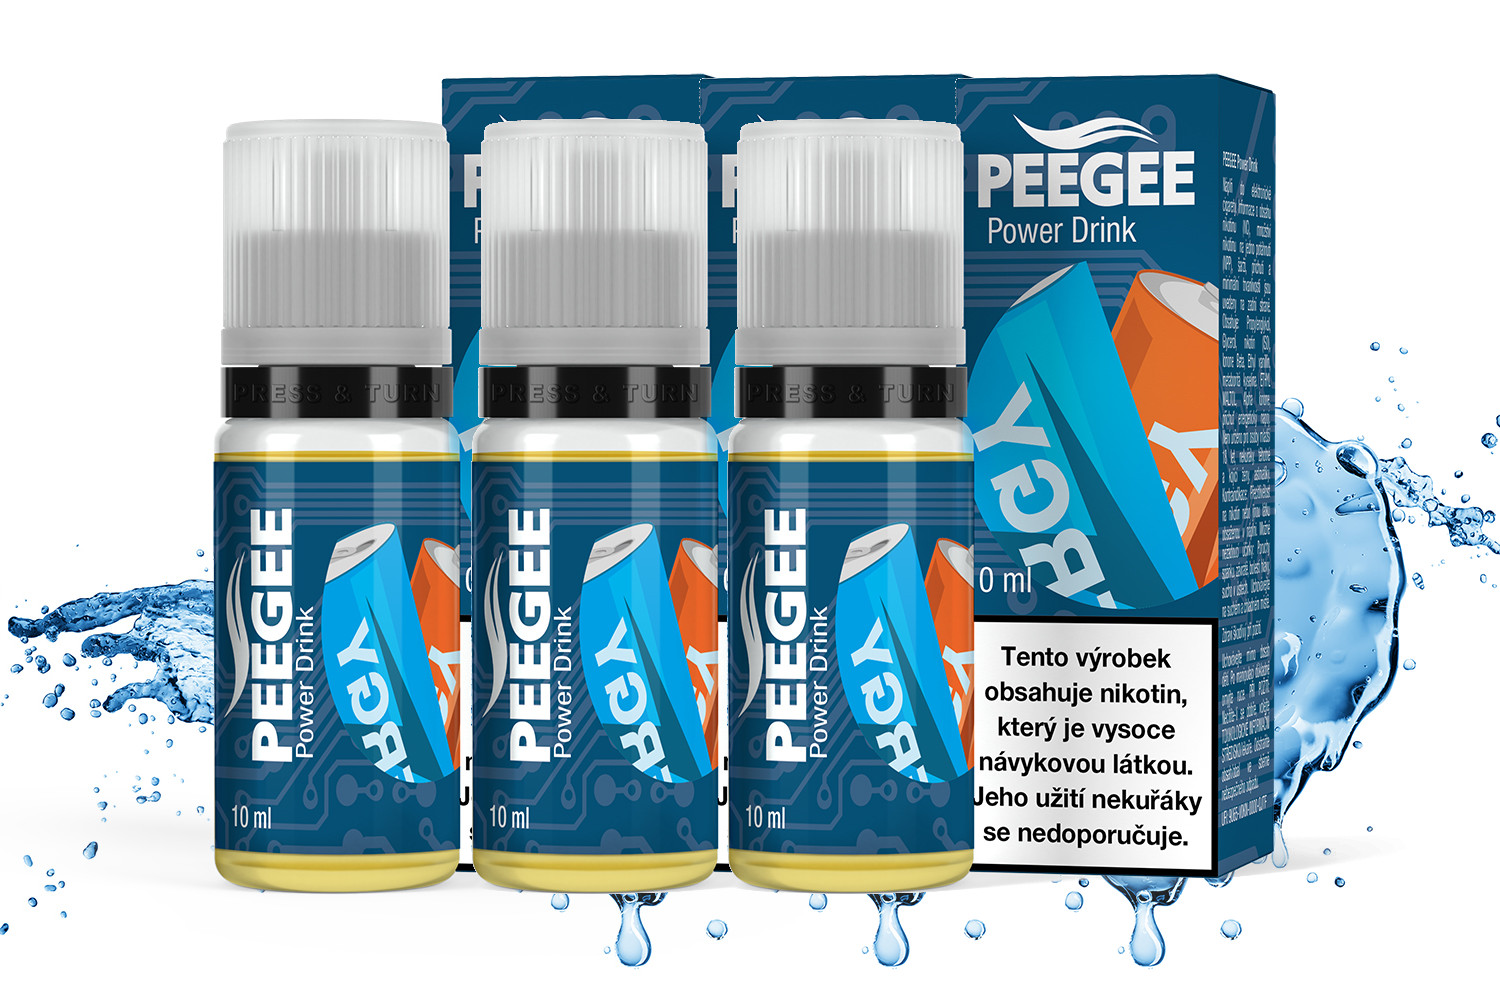 PEEGEE - Energetický nápoj (Power Drink) 3x10ml Obsah nikotinu: 18mg